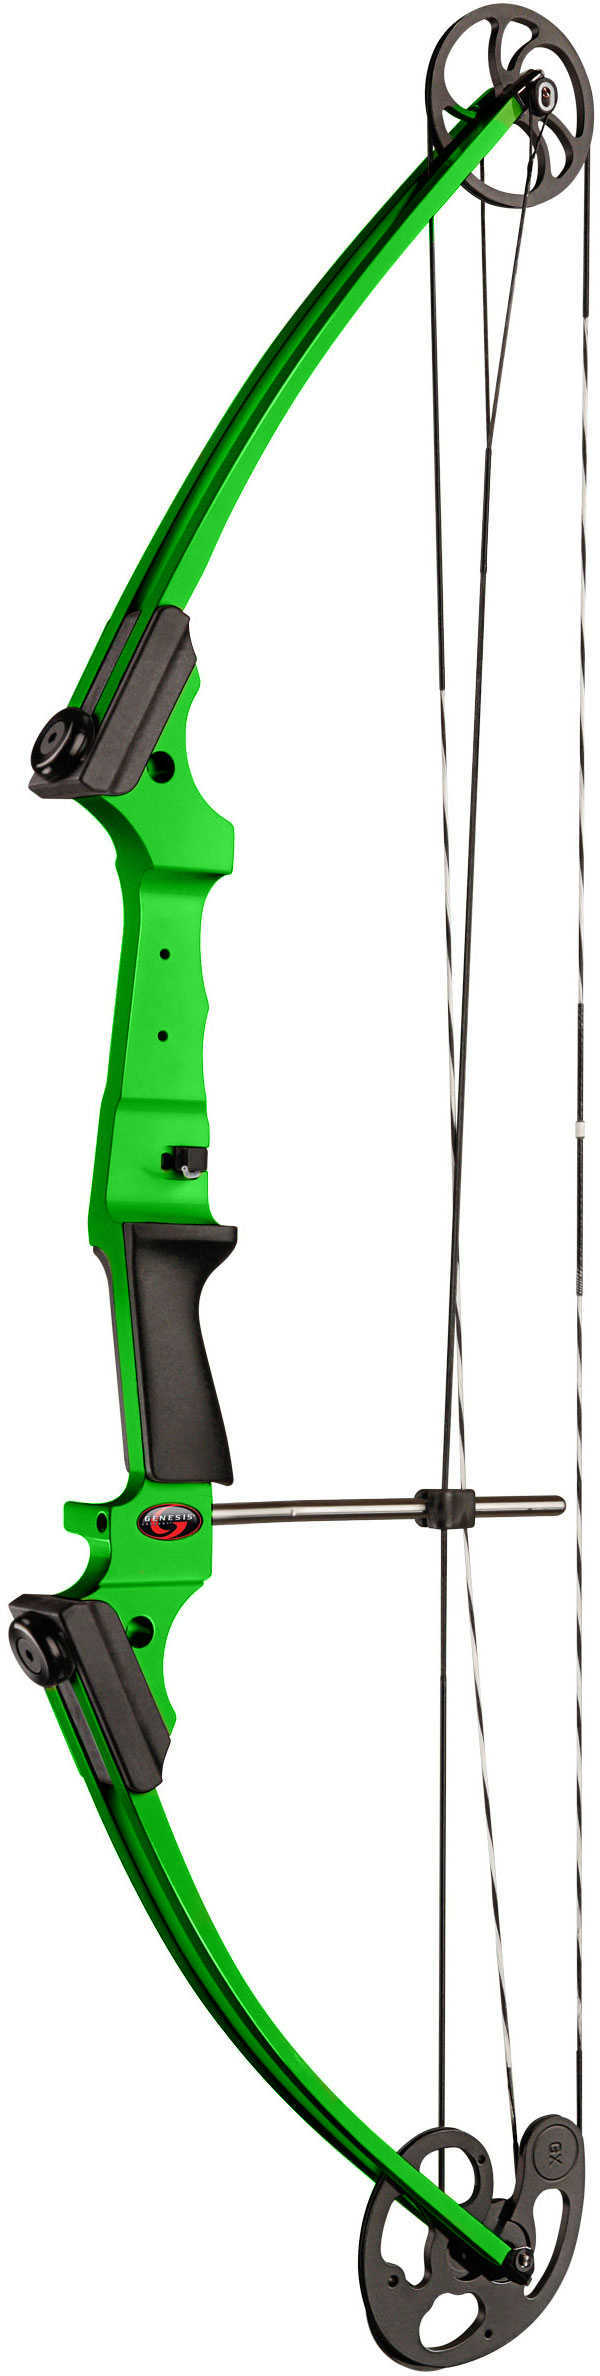 Genesis Bow Green RH Model: 10480